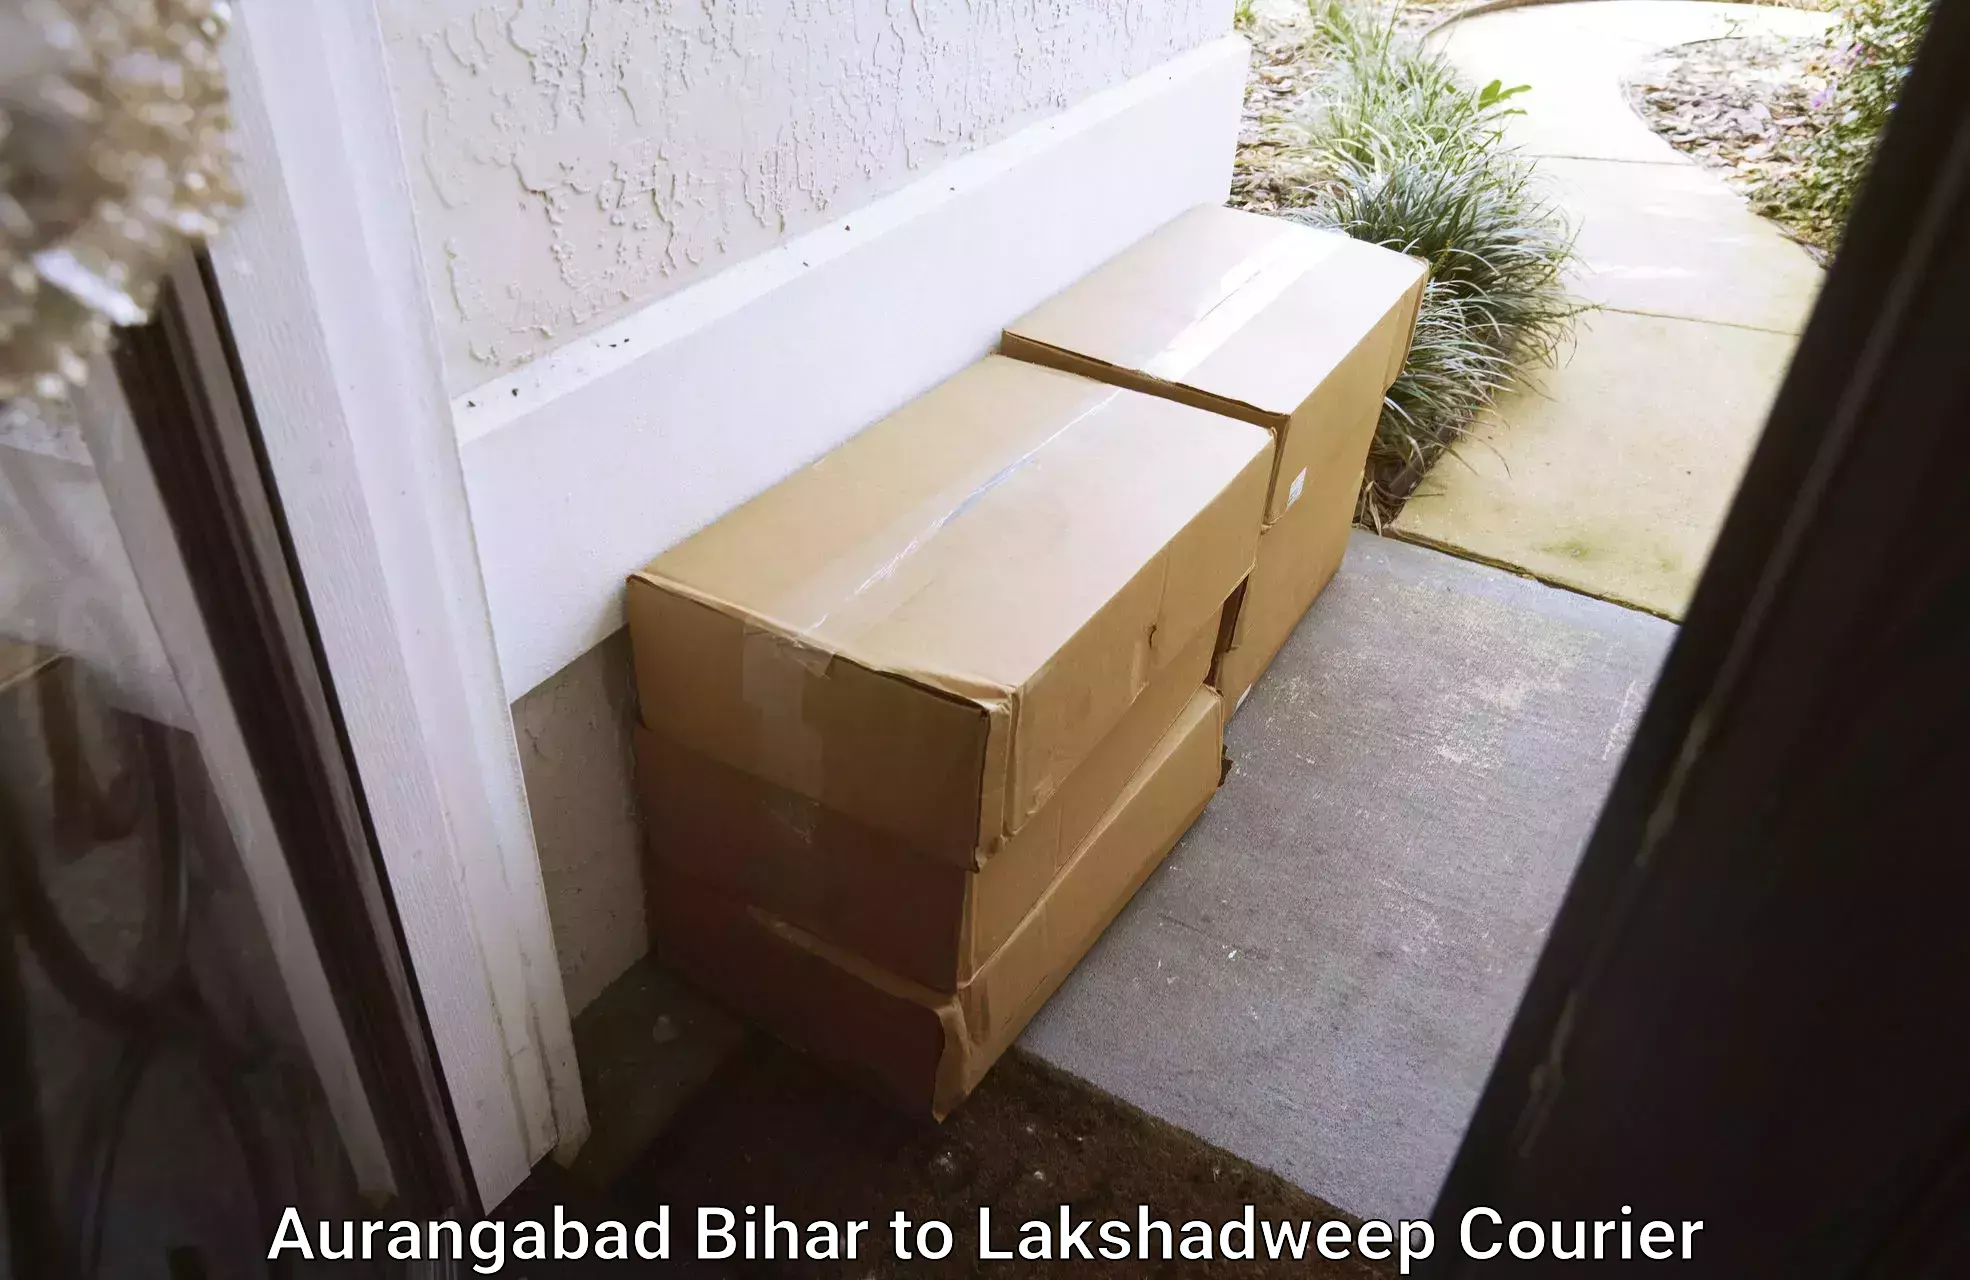 Efficient packing and moving Aurangabad Bihar to Lakshadweep